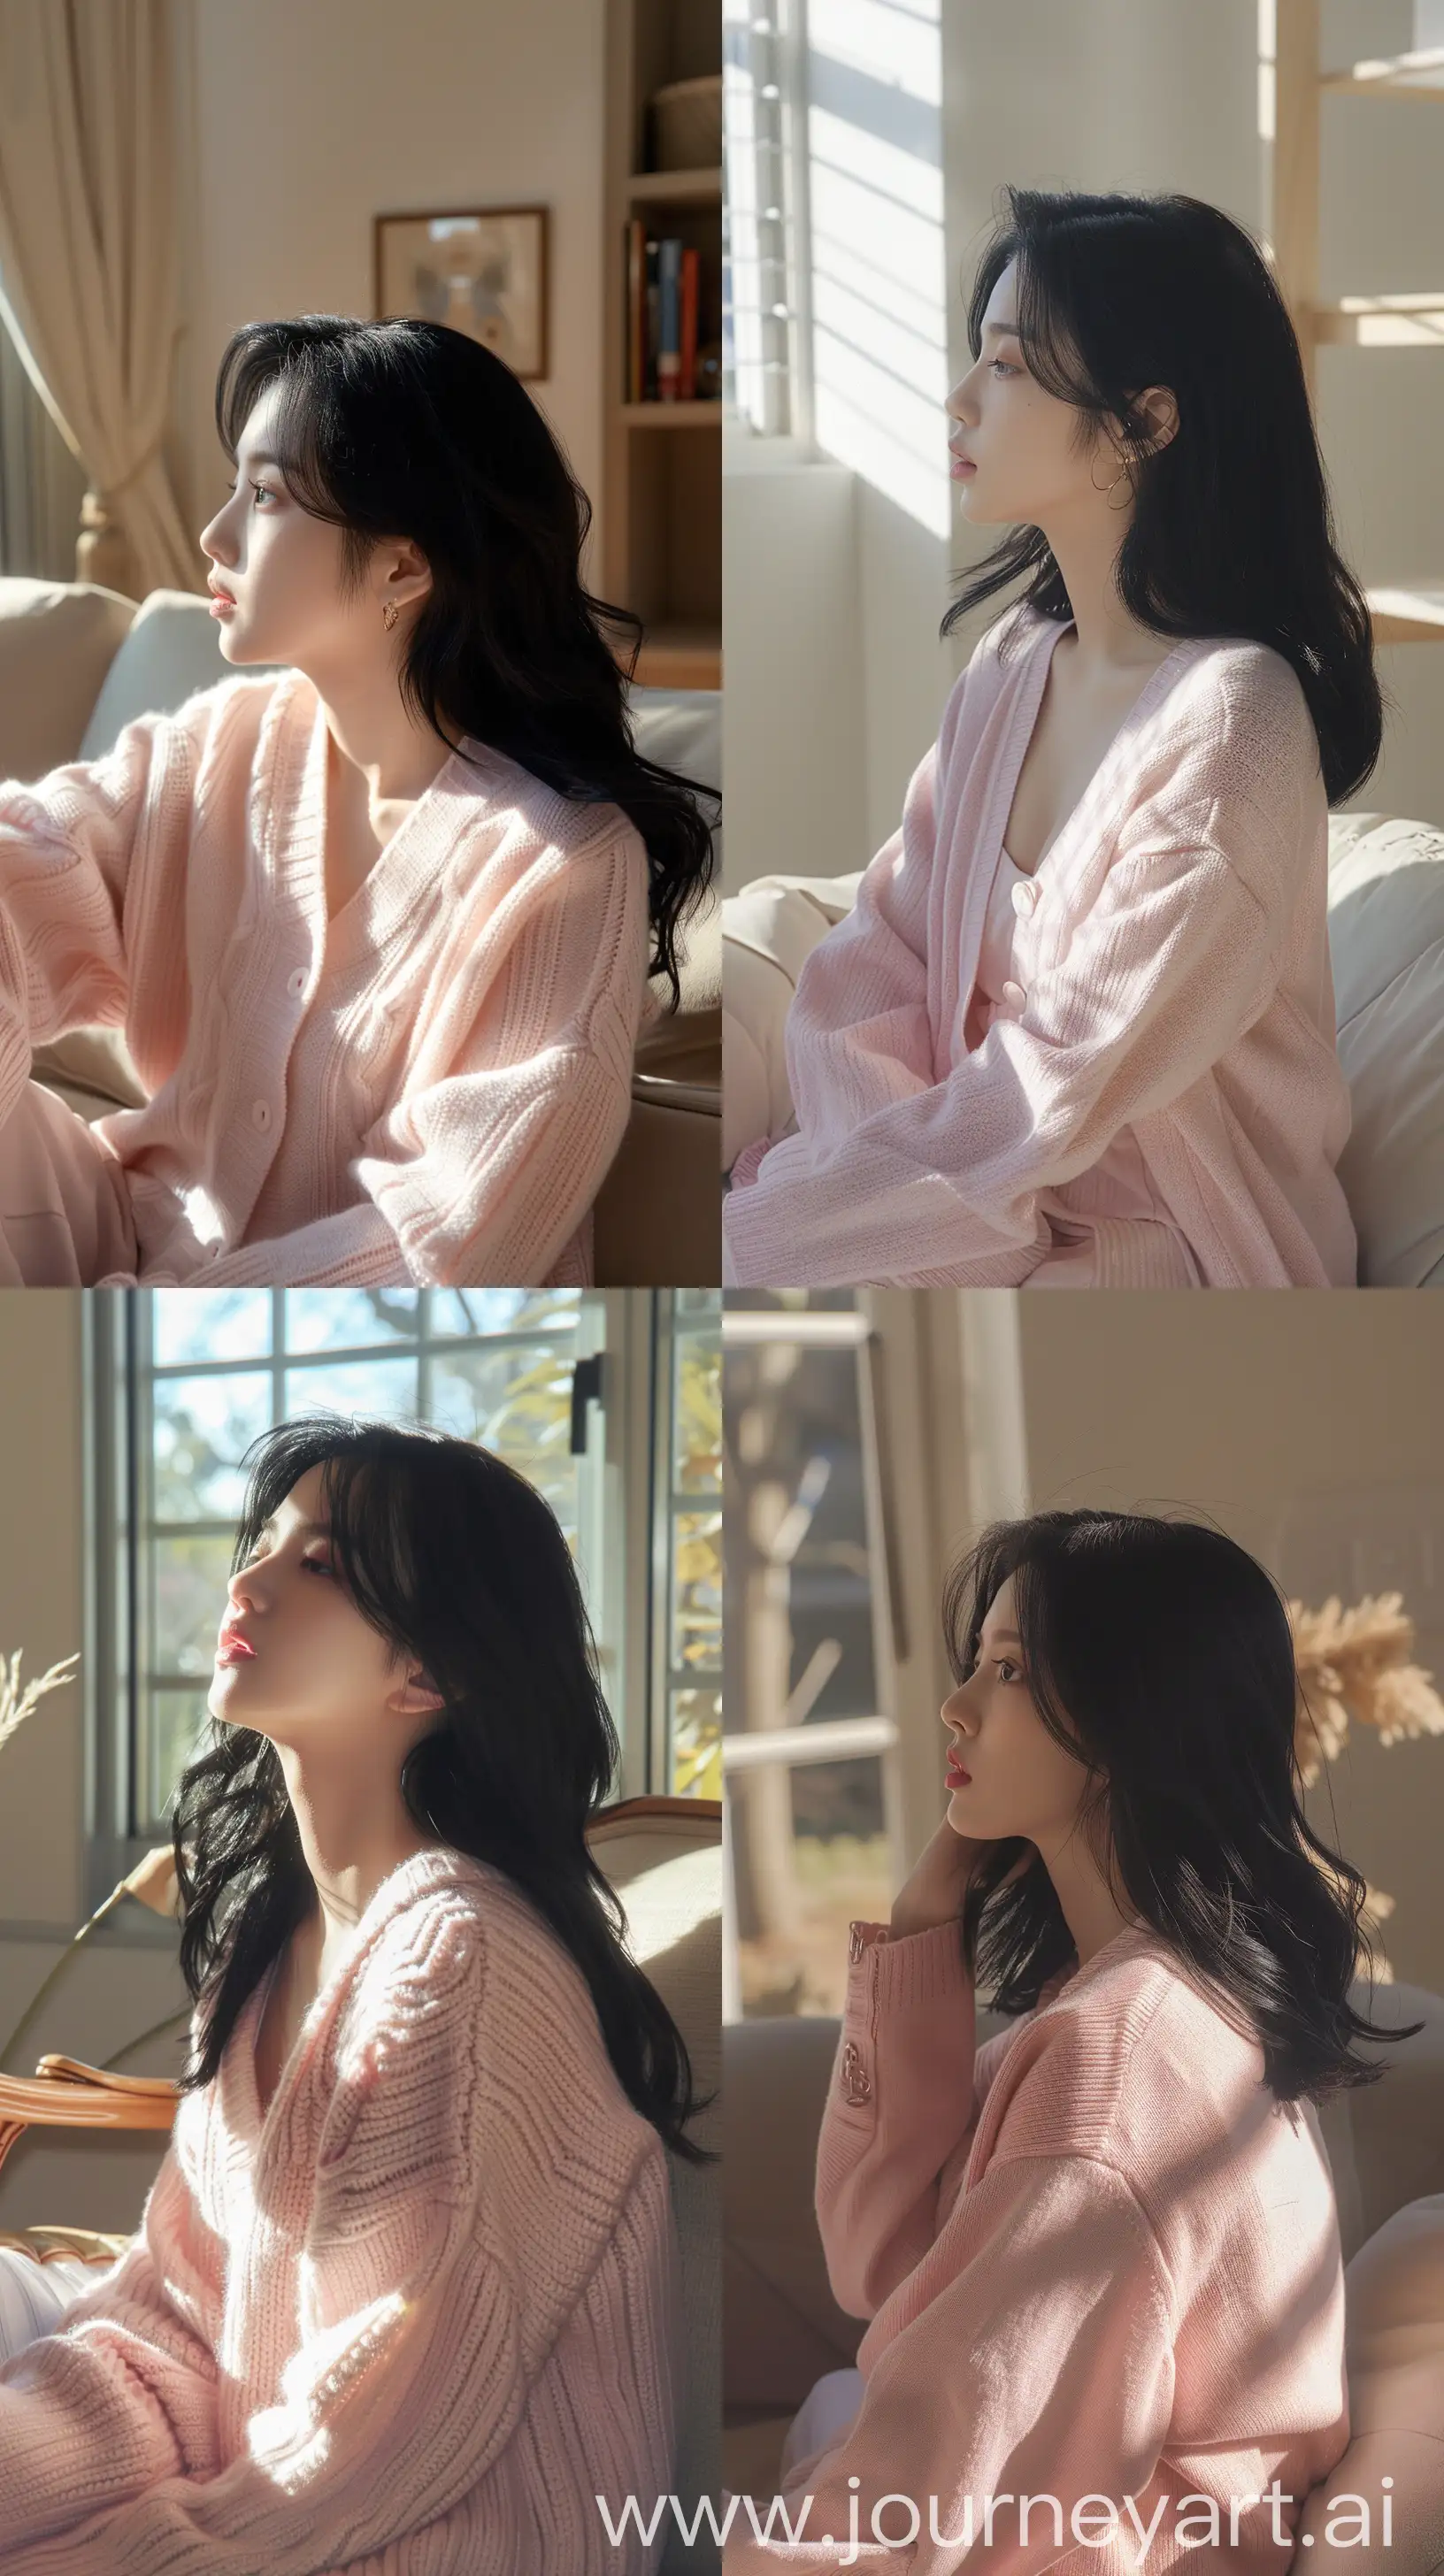 Blackpinks-Jennie-Relaxing-in-Soft-Pink-Cardigan-in-Sunlit-Room